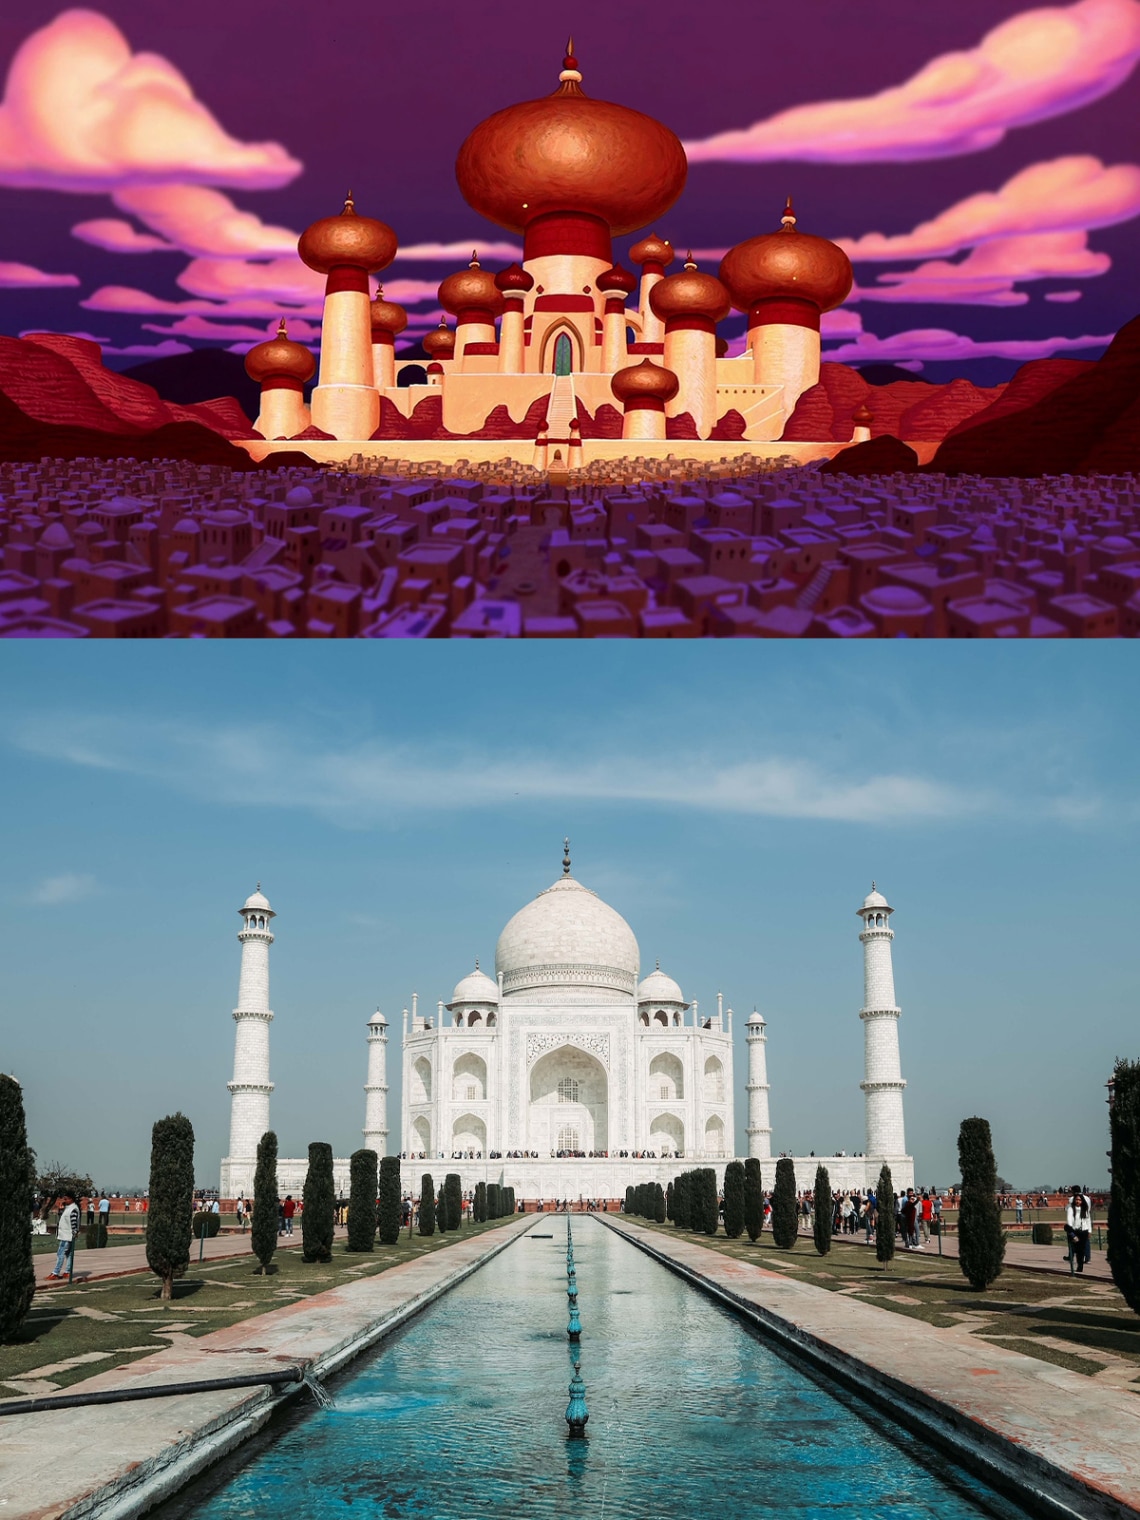 Aladdin: Taj Mahal, India